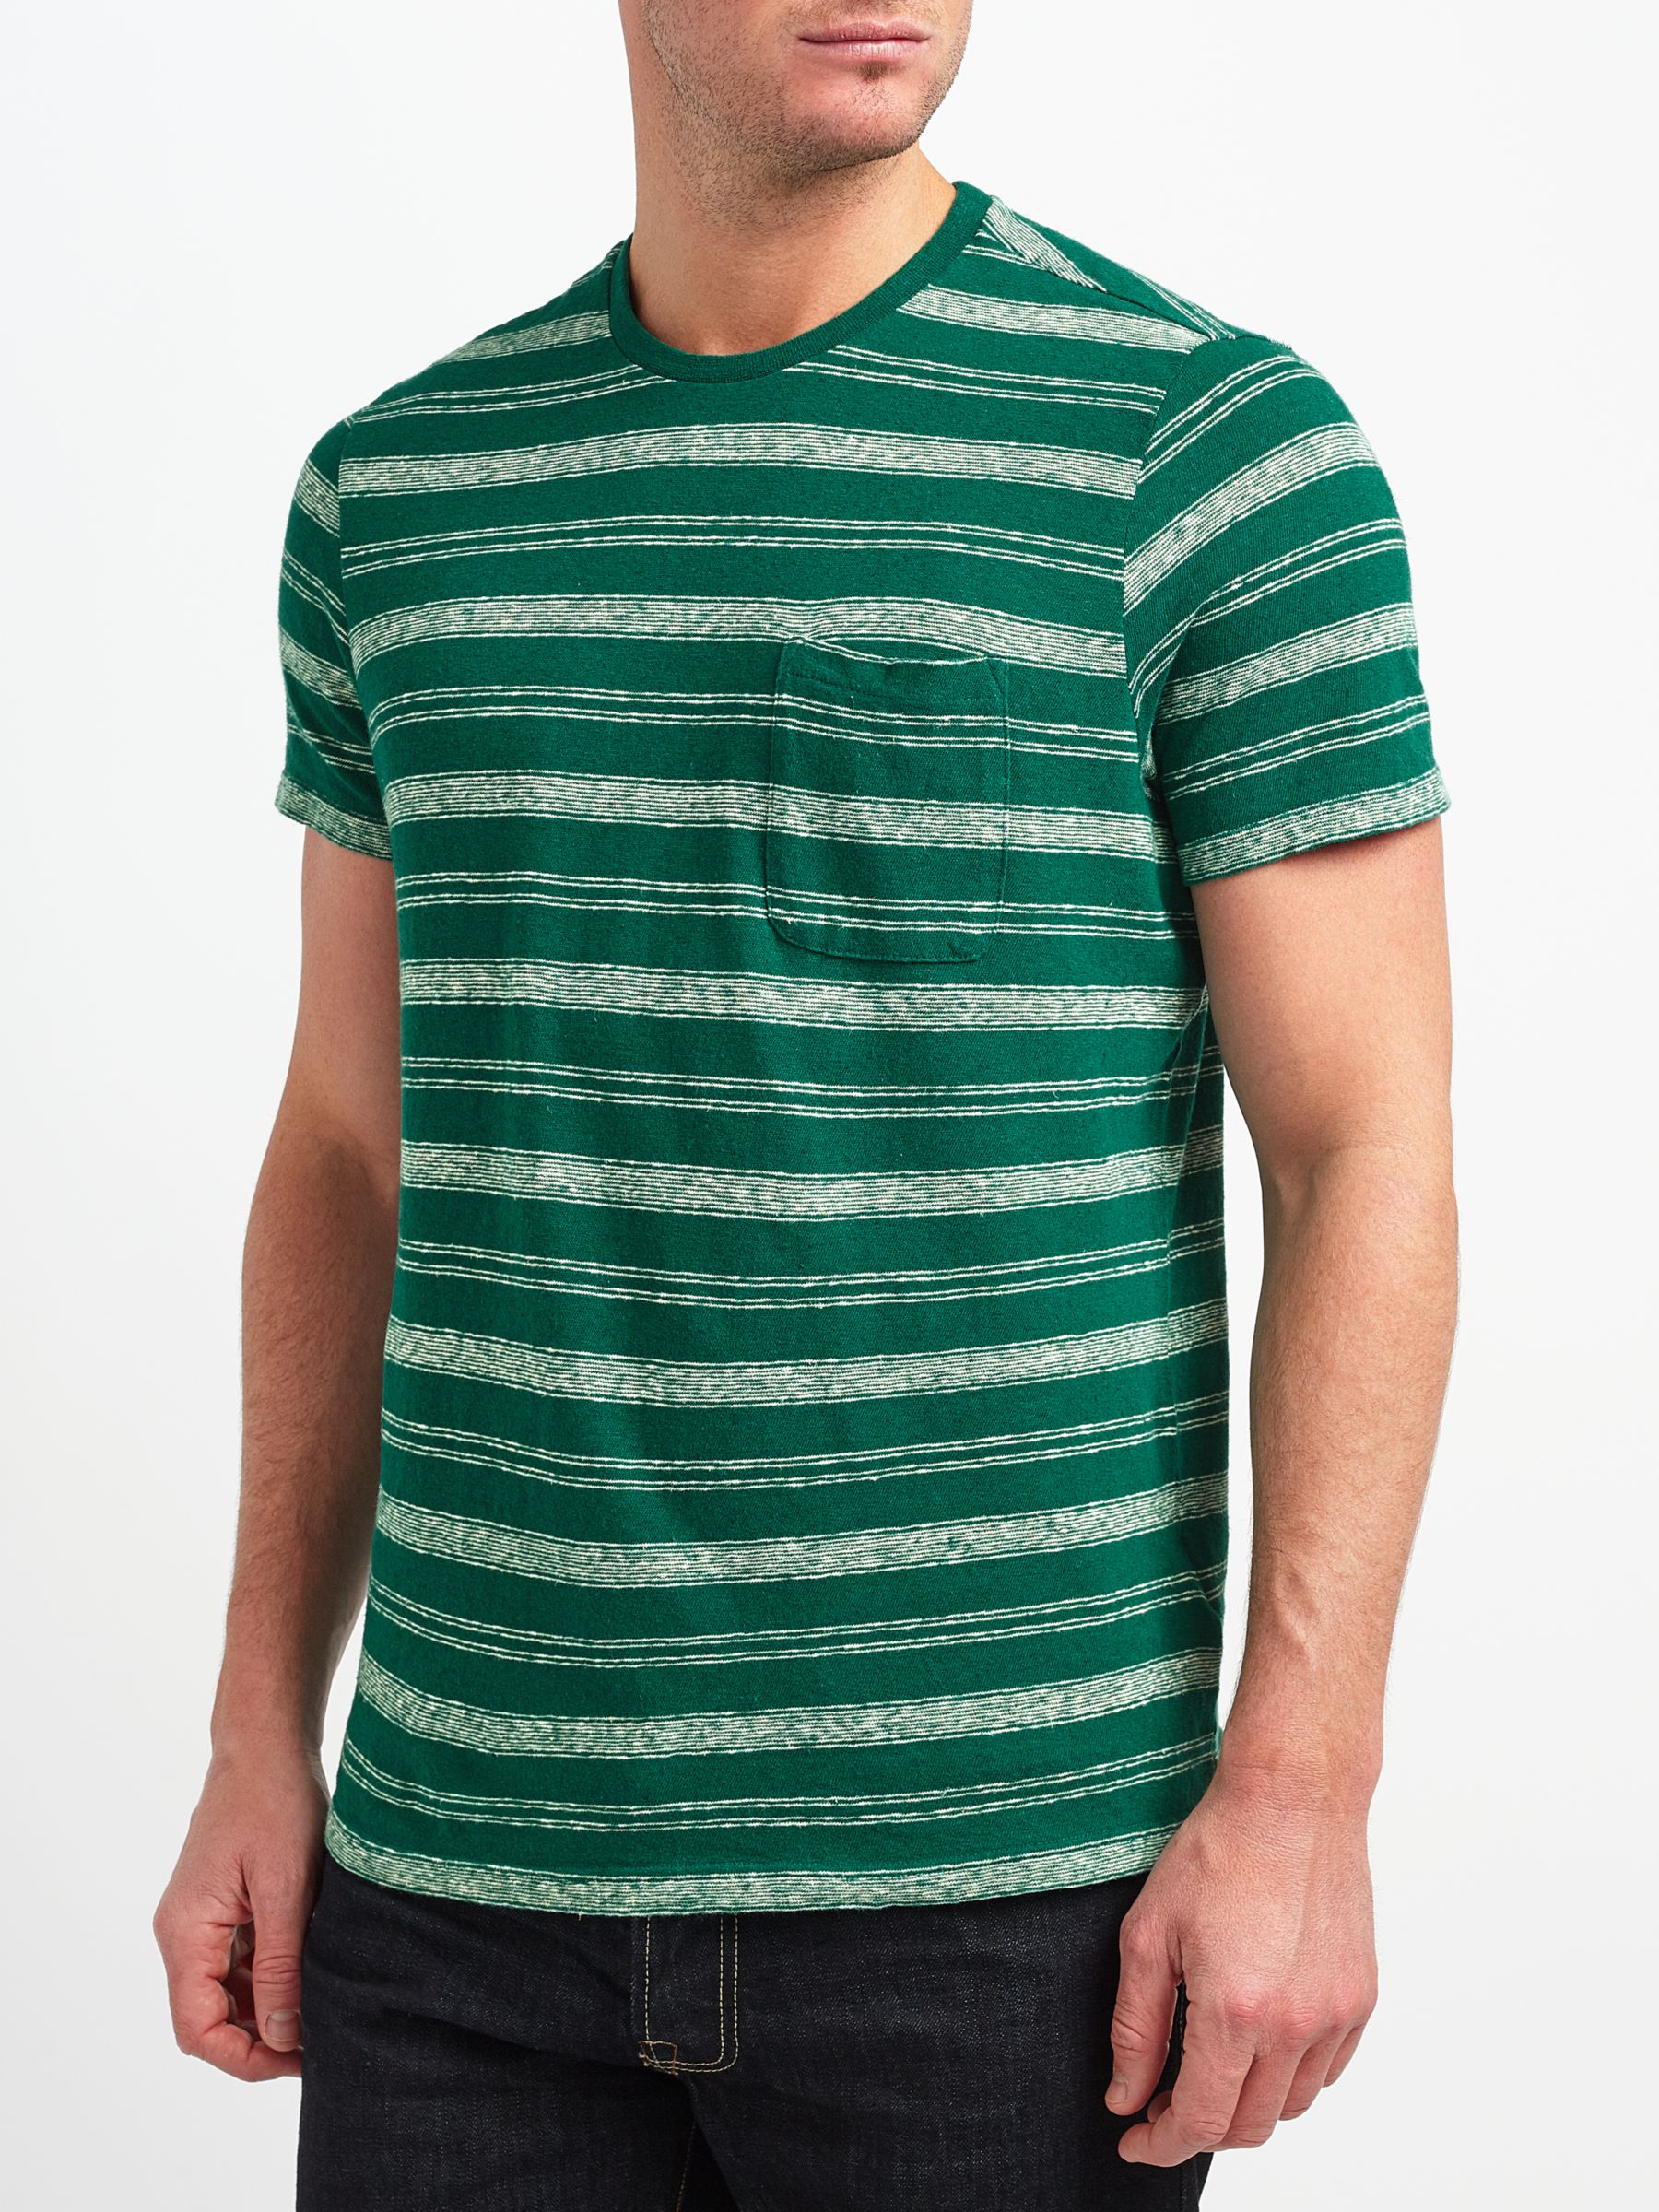 JOHN LEWIS & Co. Cotton Linen Stripe T-Shirt, Green, S